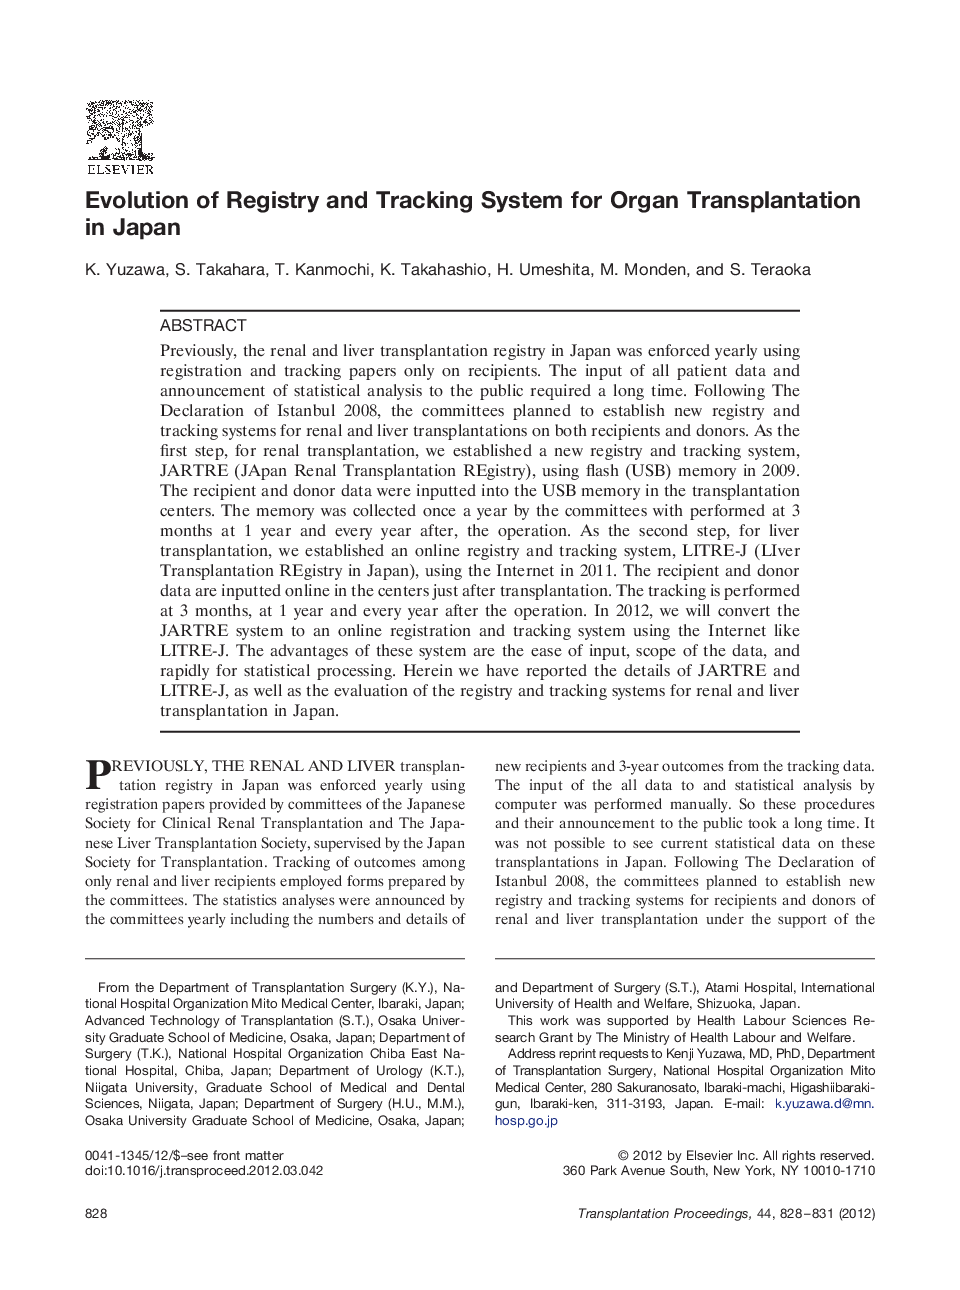 Evolution of Registry and Tracking System for Organ Transplantation in Japan 